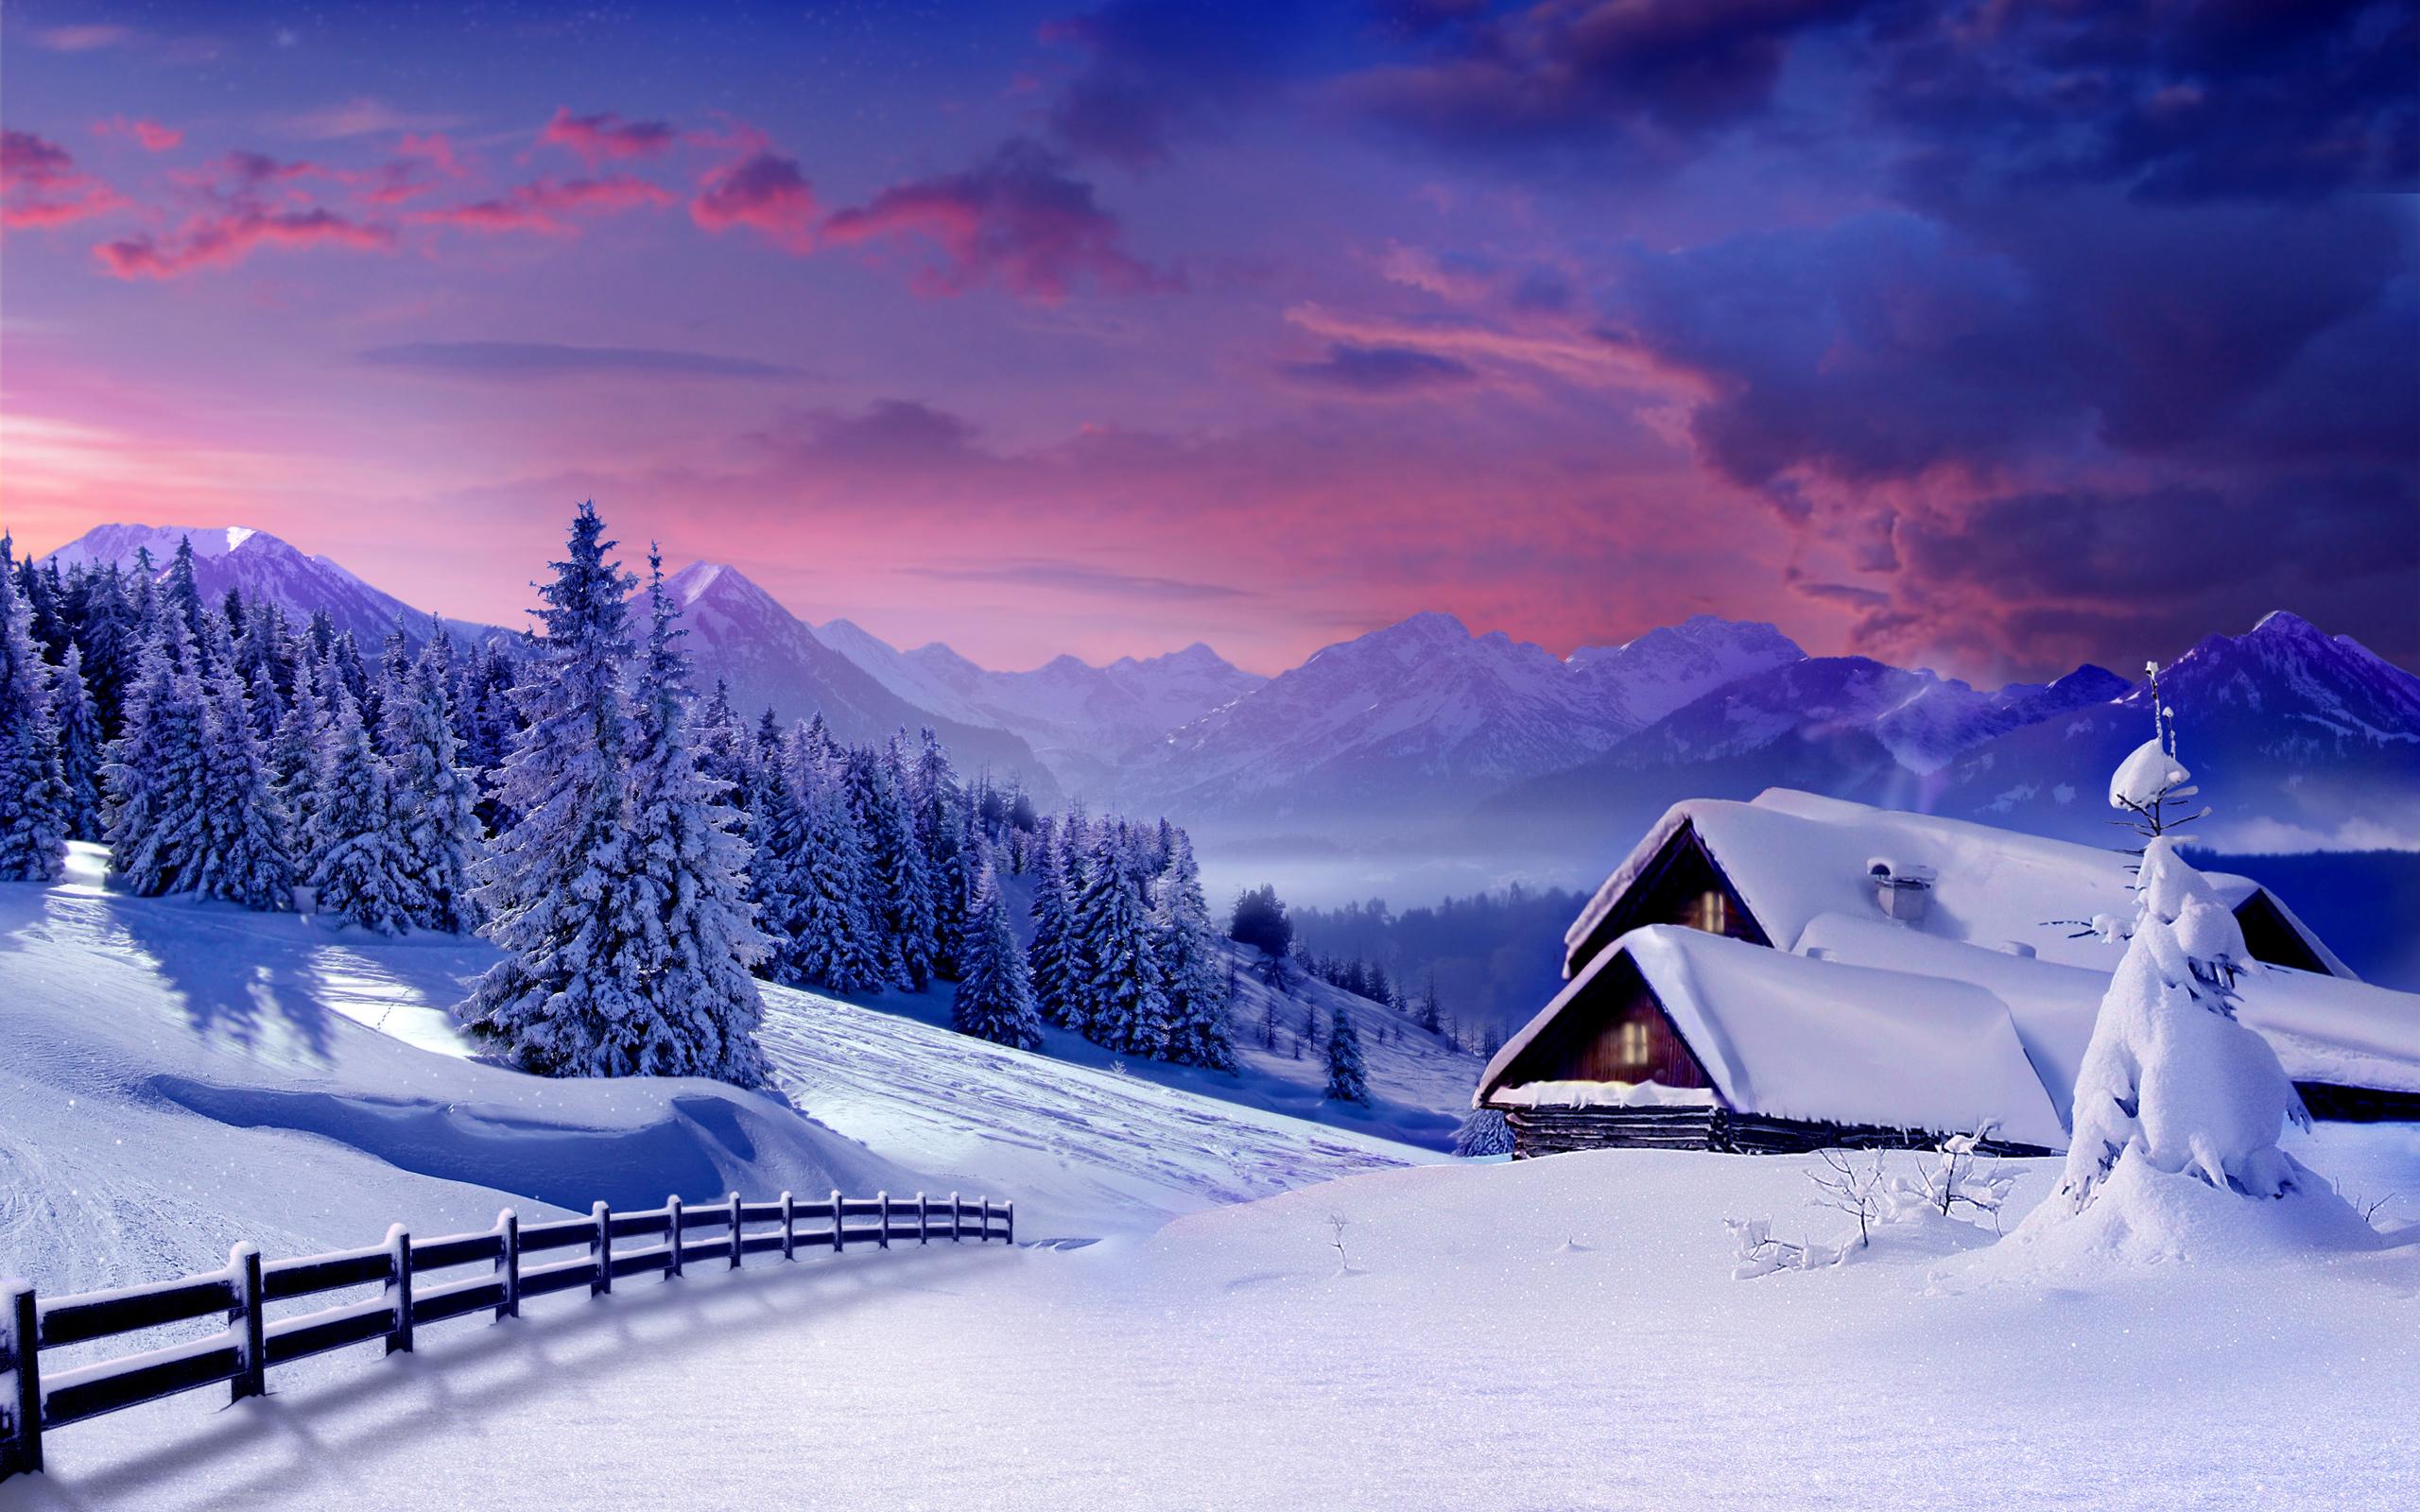 Winter Pictures For Desktop Backgrounds